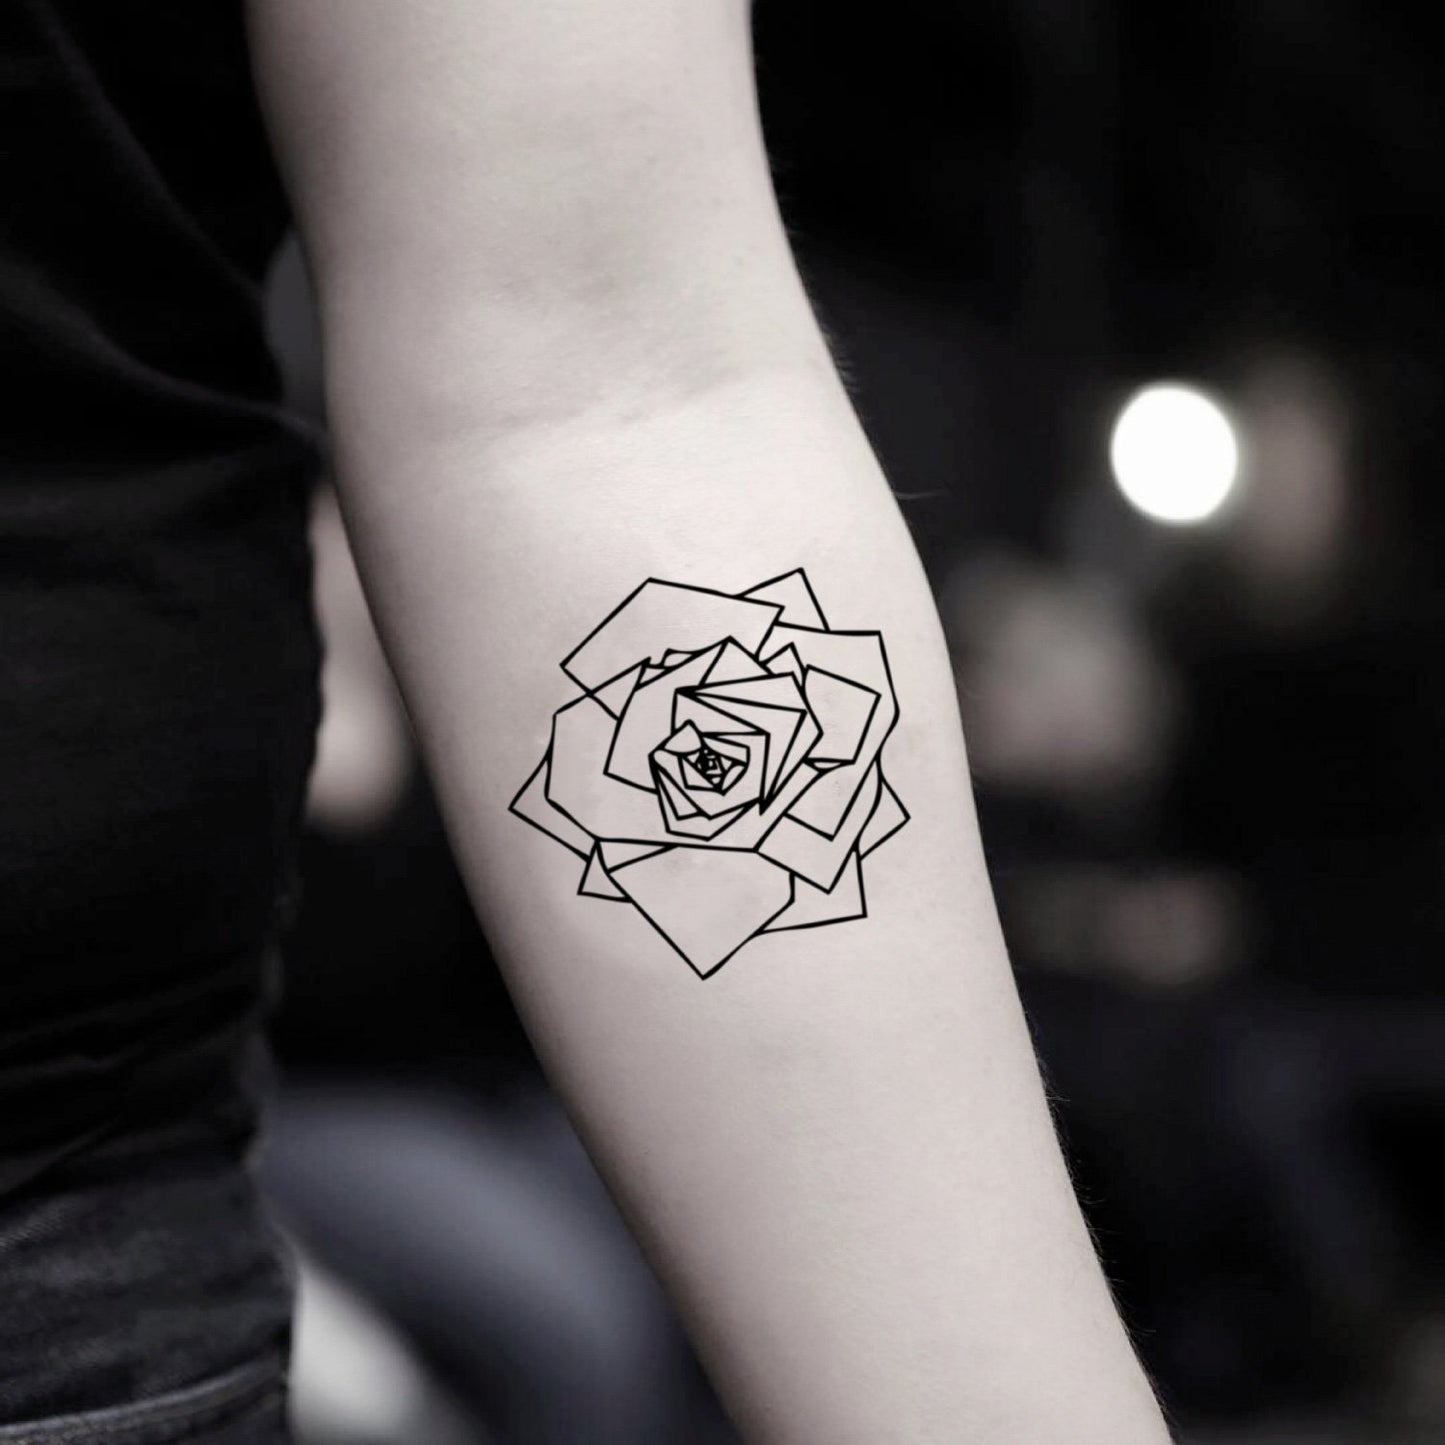 fake small geometric rose line flower temporary tattoo sticker design idea on inner arm